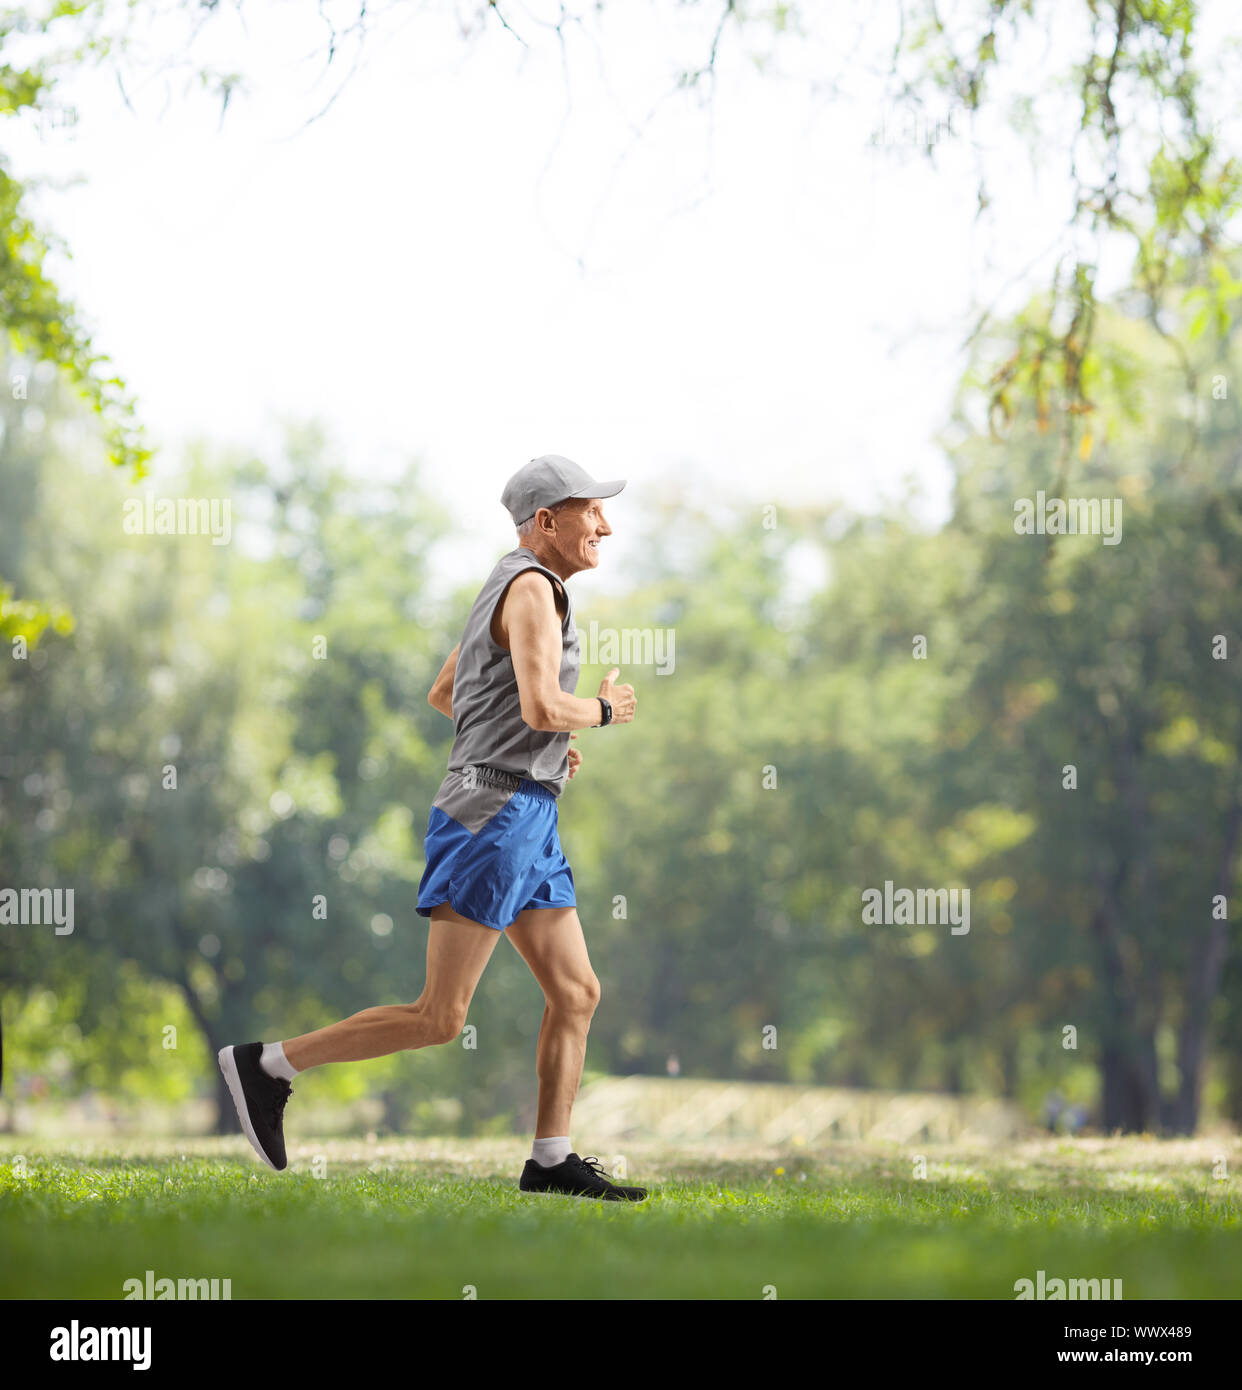 Full length profile shot of an elderly man running outdoors Stock Photo